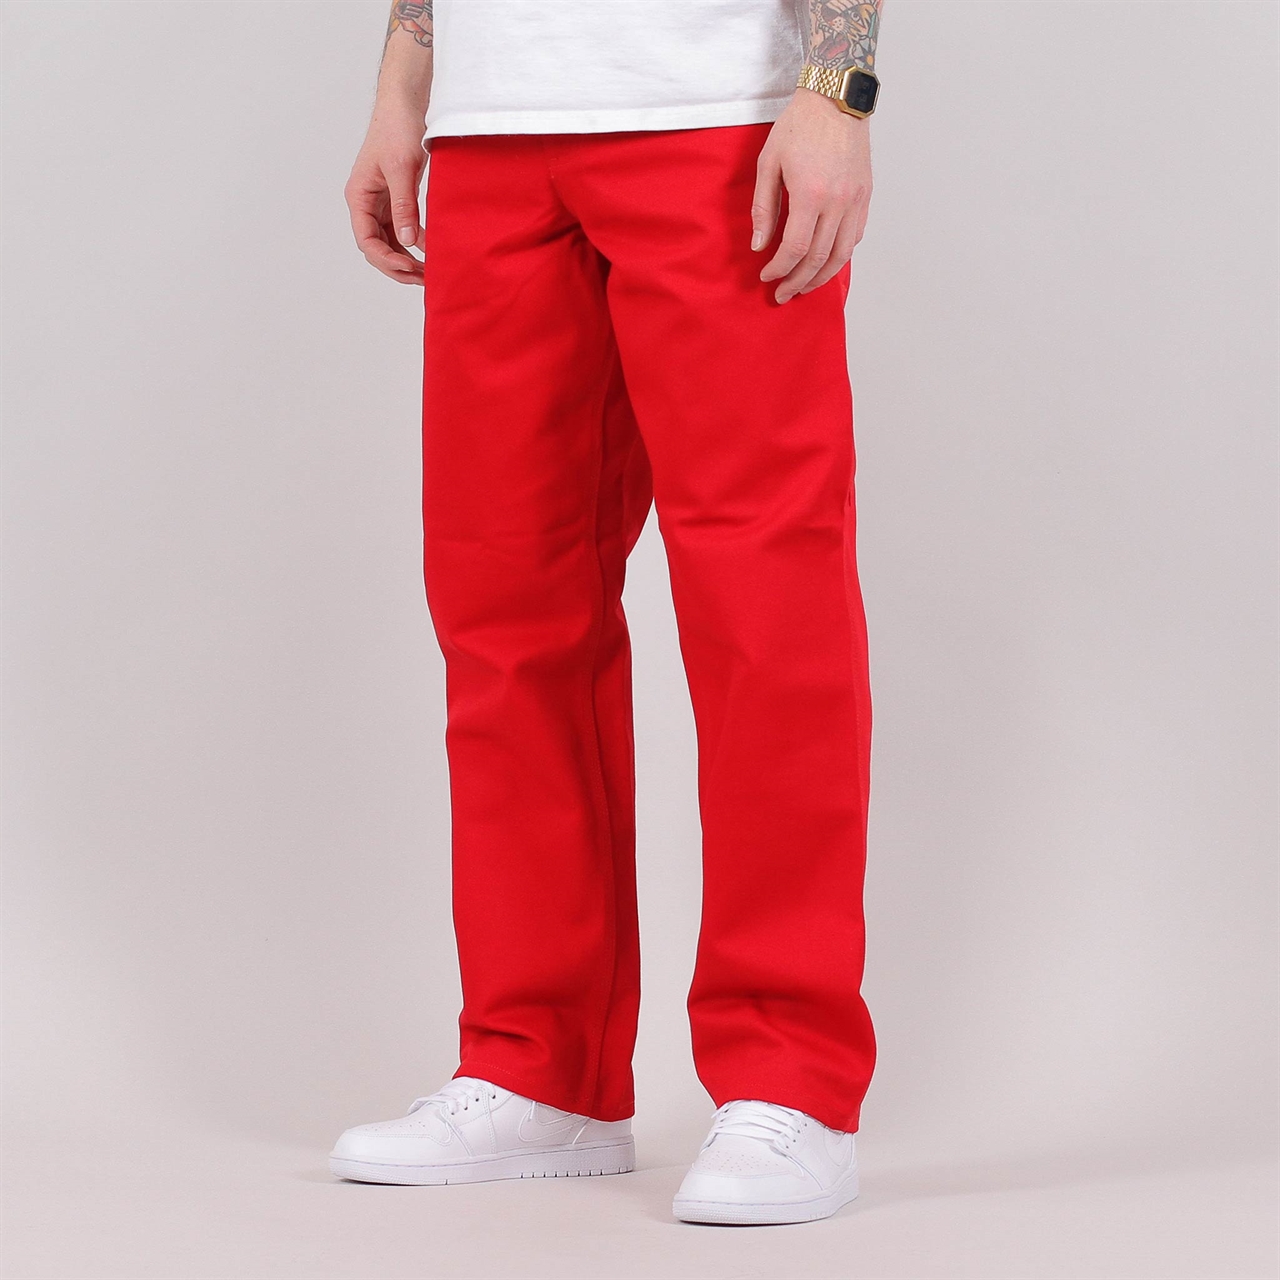 red carhartt pants